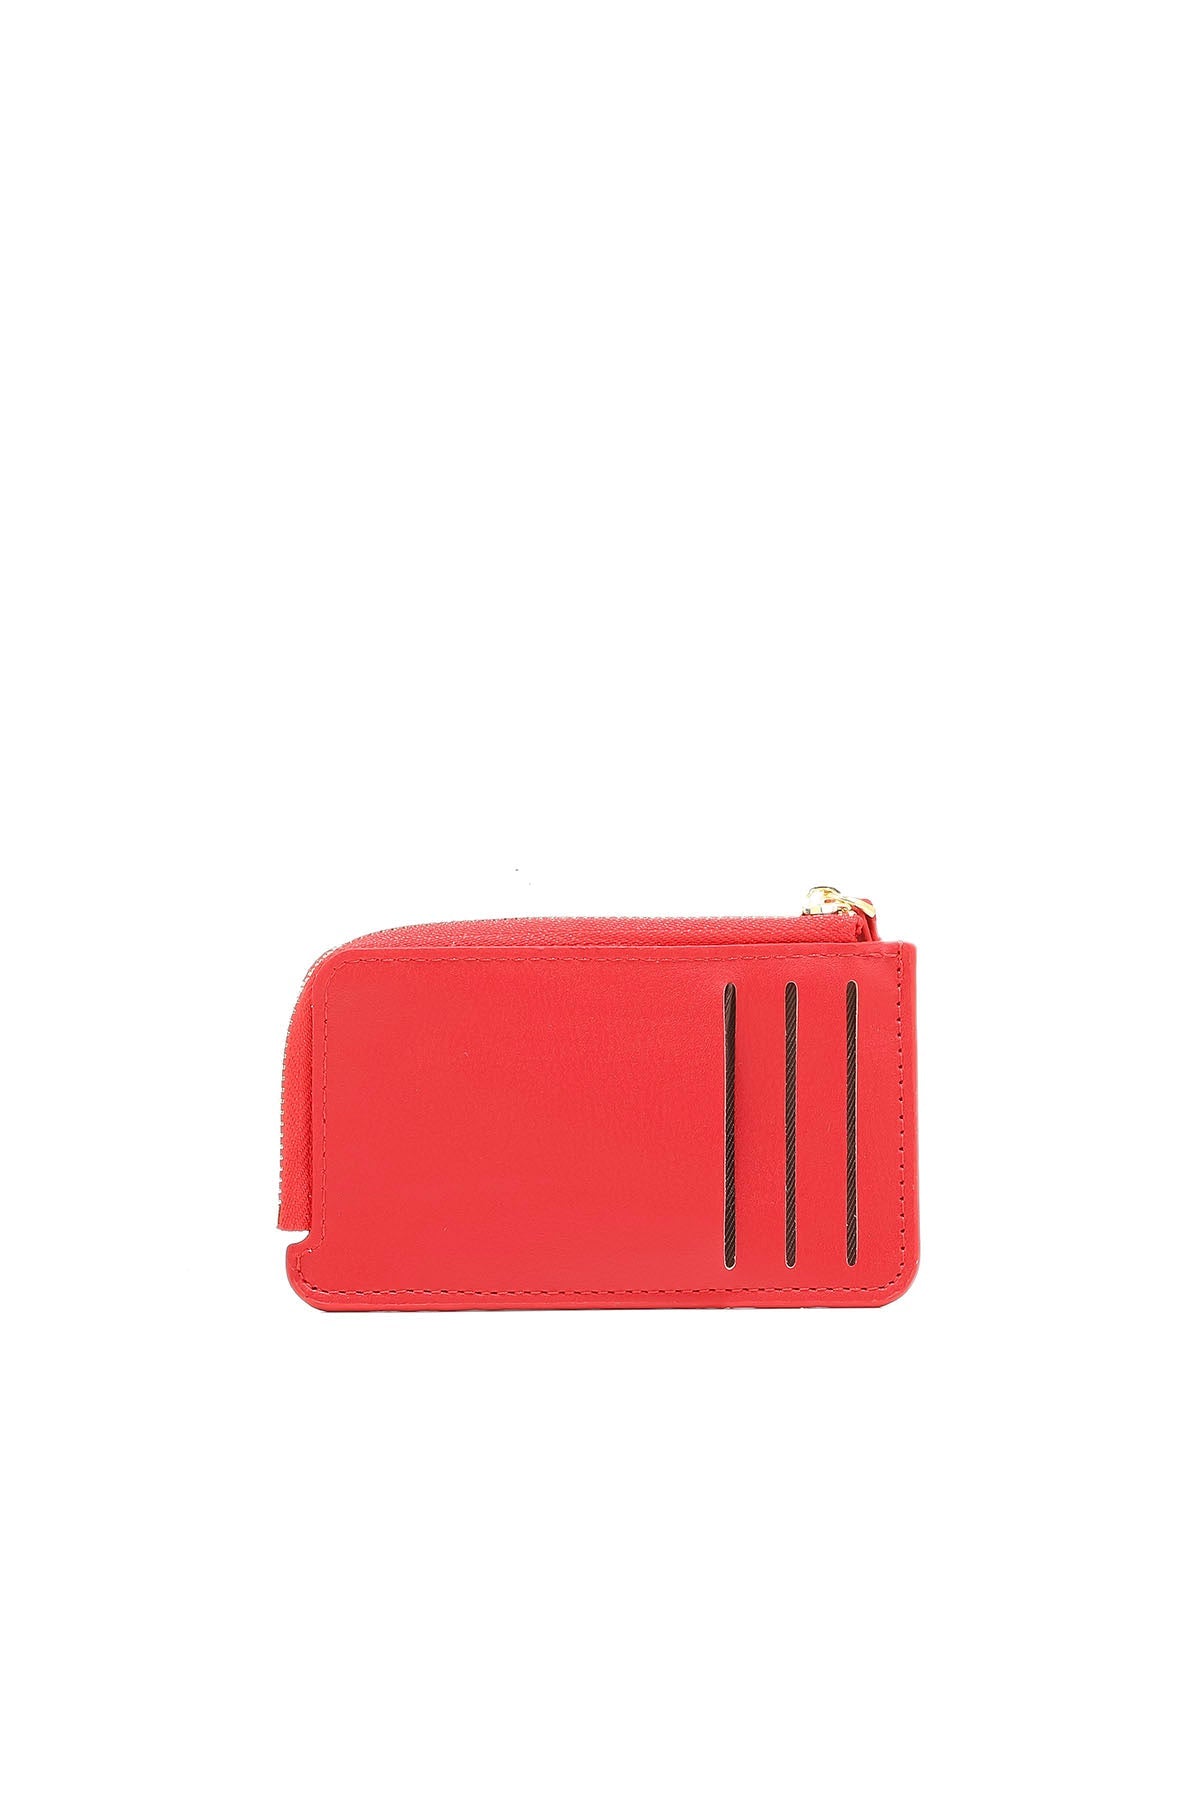 Wristlet Wallet B26050-Red